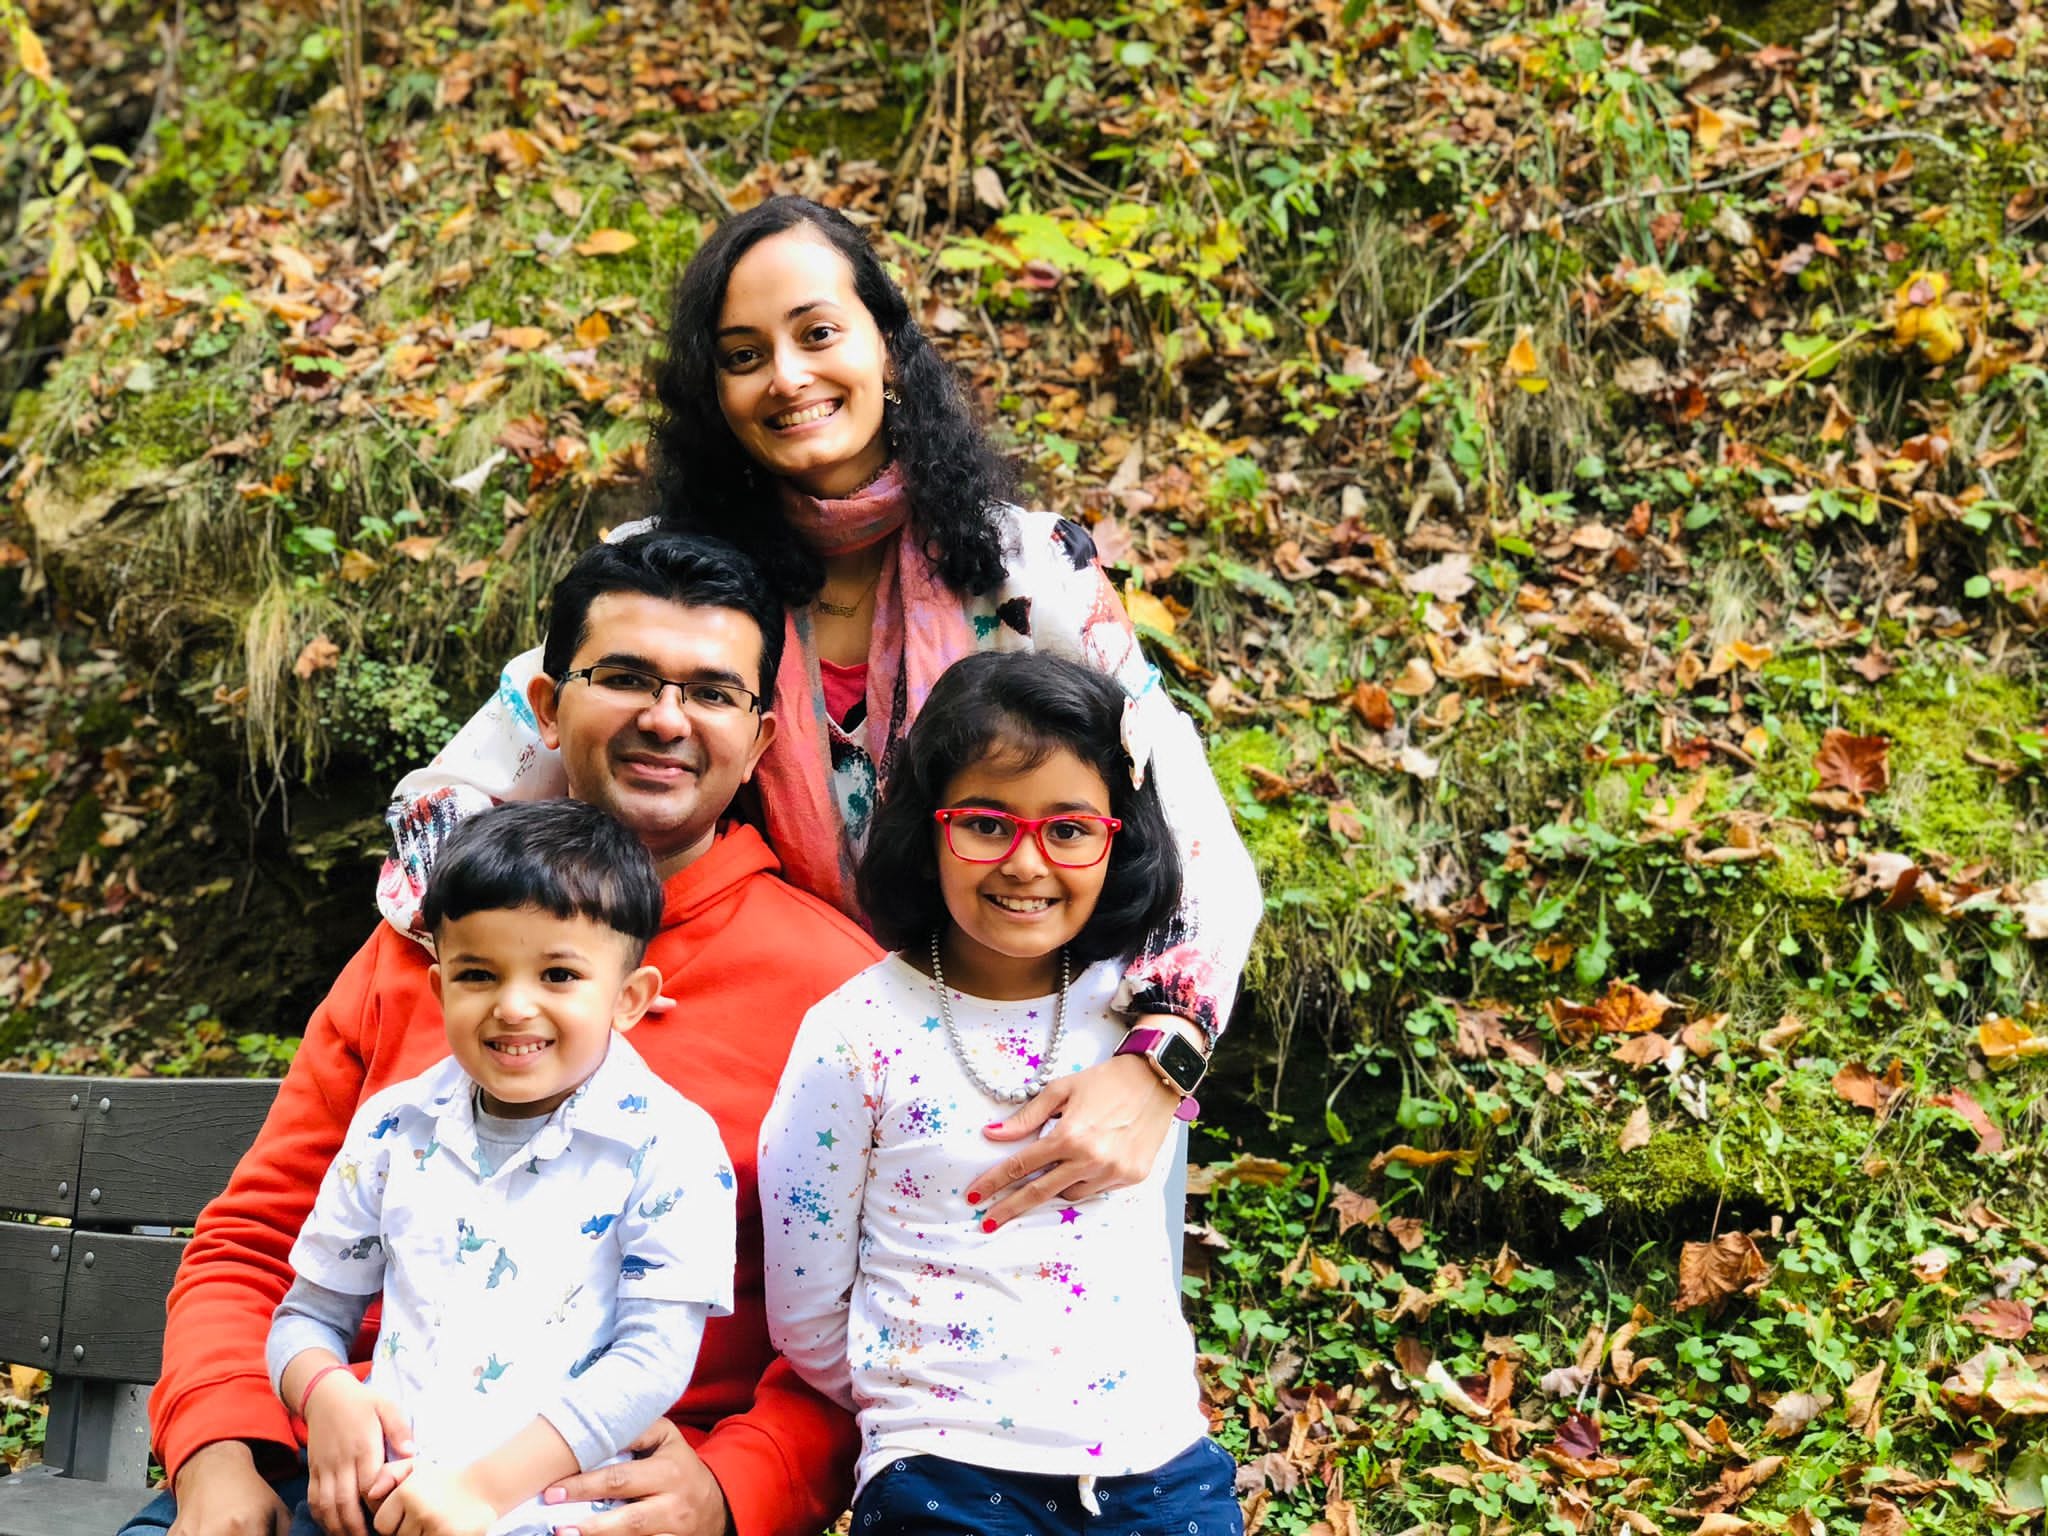 The Bhatt family’s medical billing ordeal started on April 7